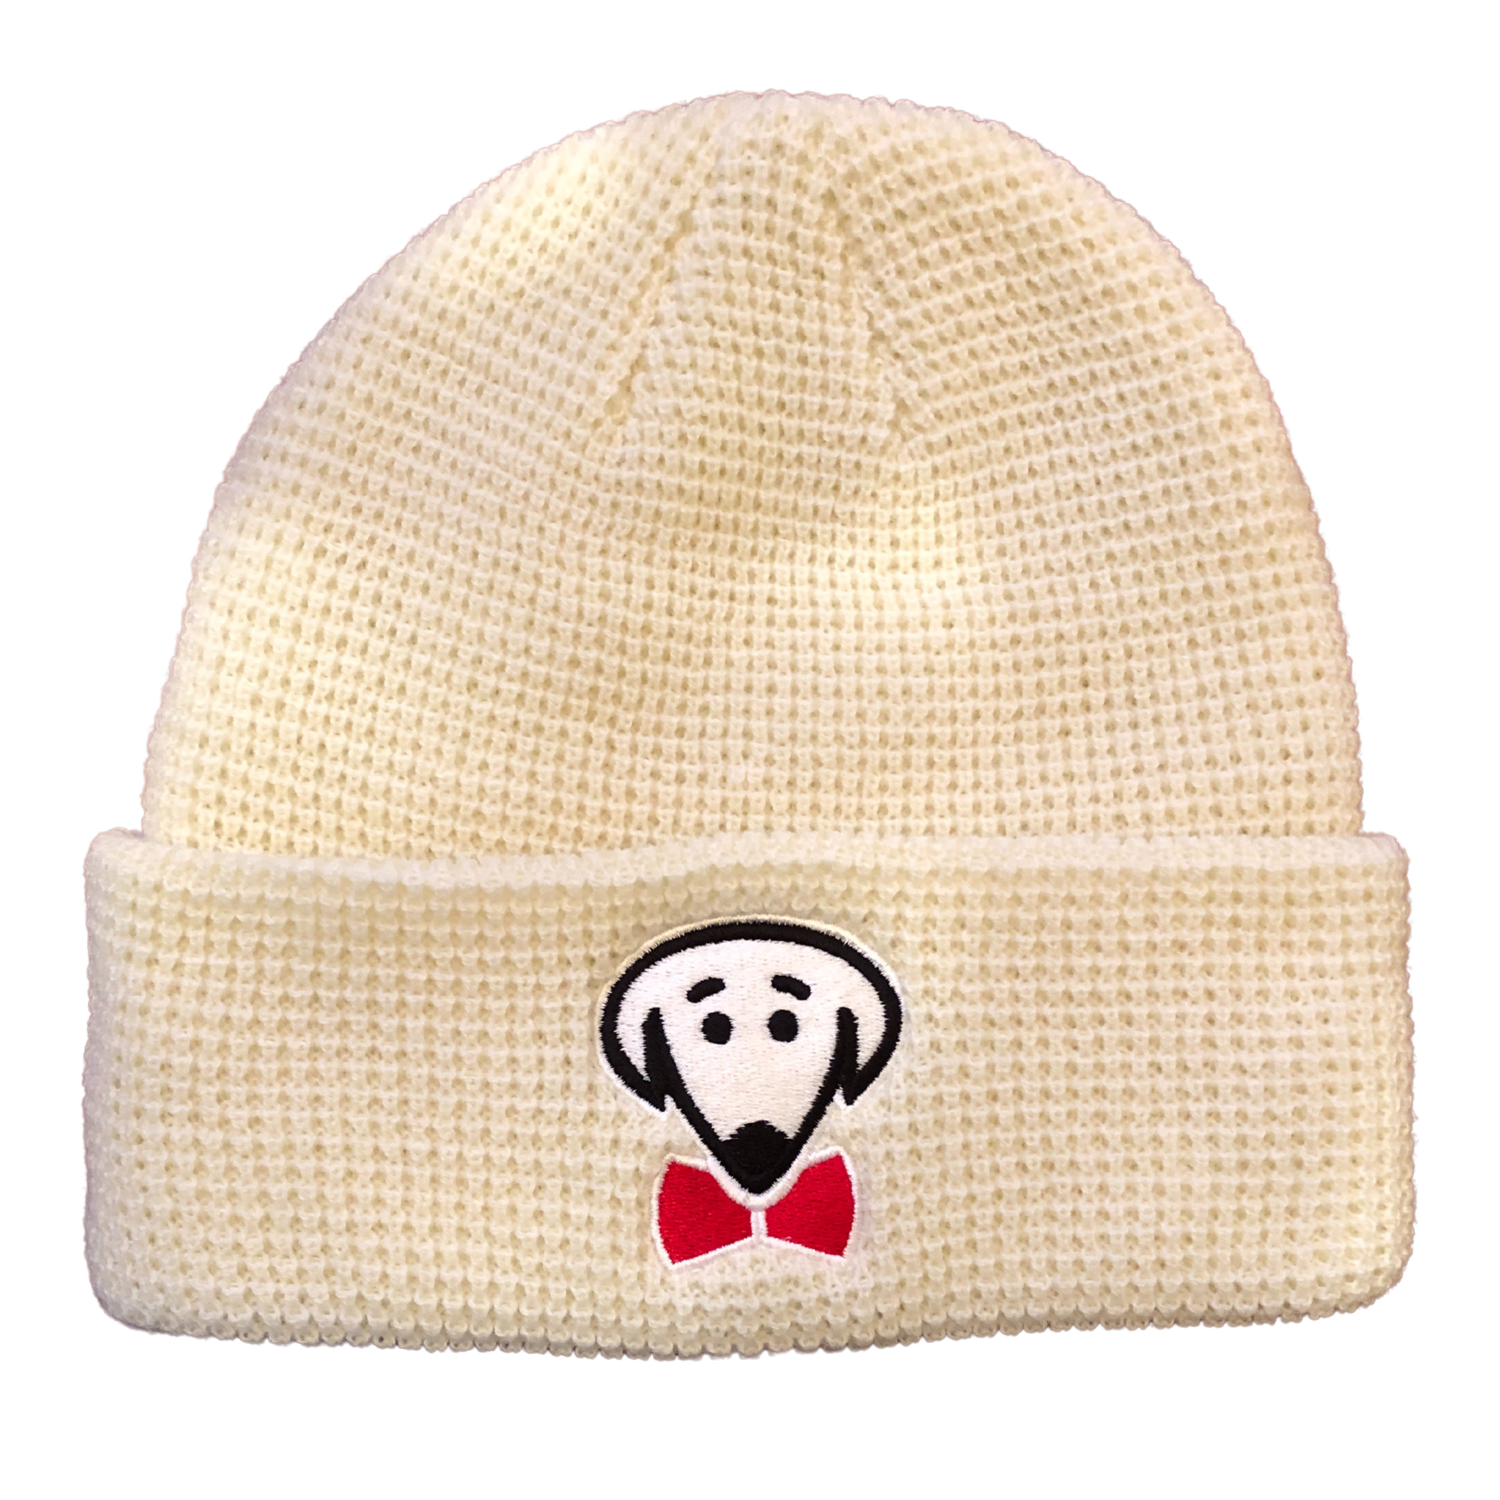 Beau Tyler - Waffle winter knit hat cream white temp